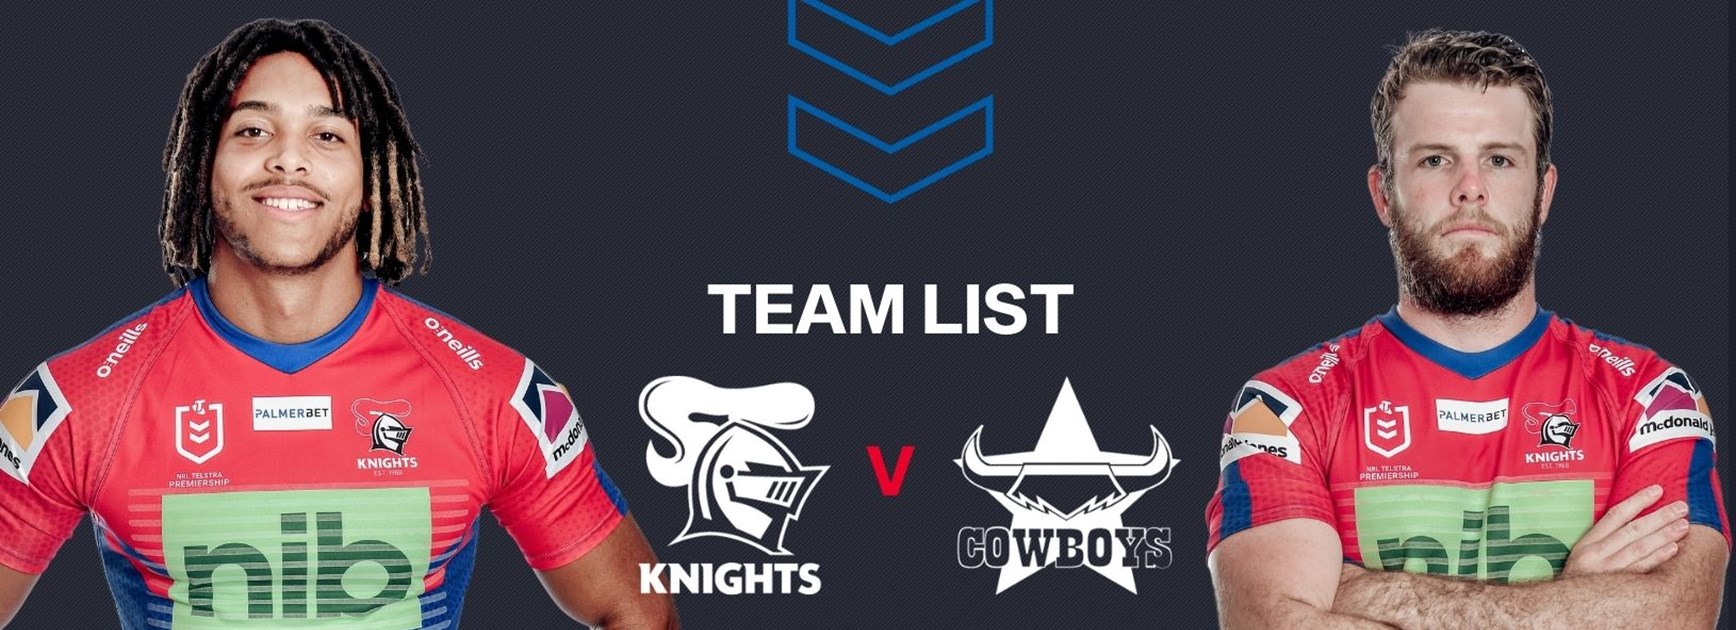 Cowboys v Knights Round 9 NRL team list